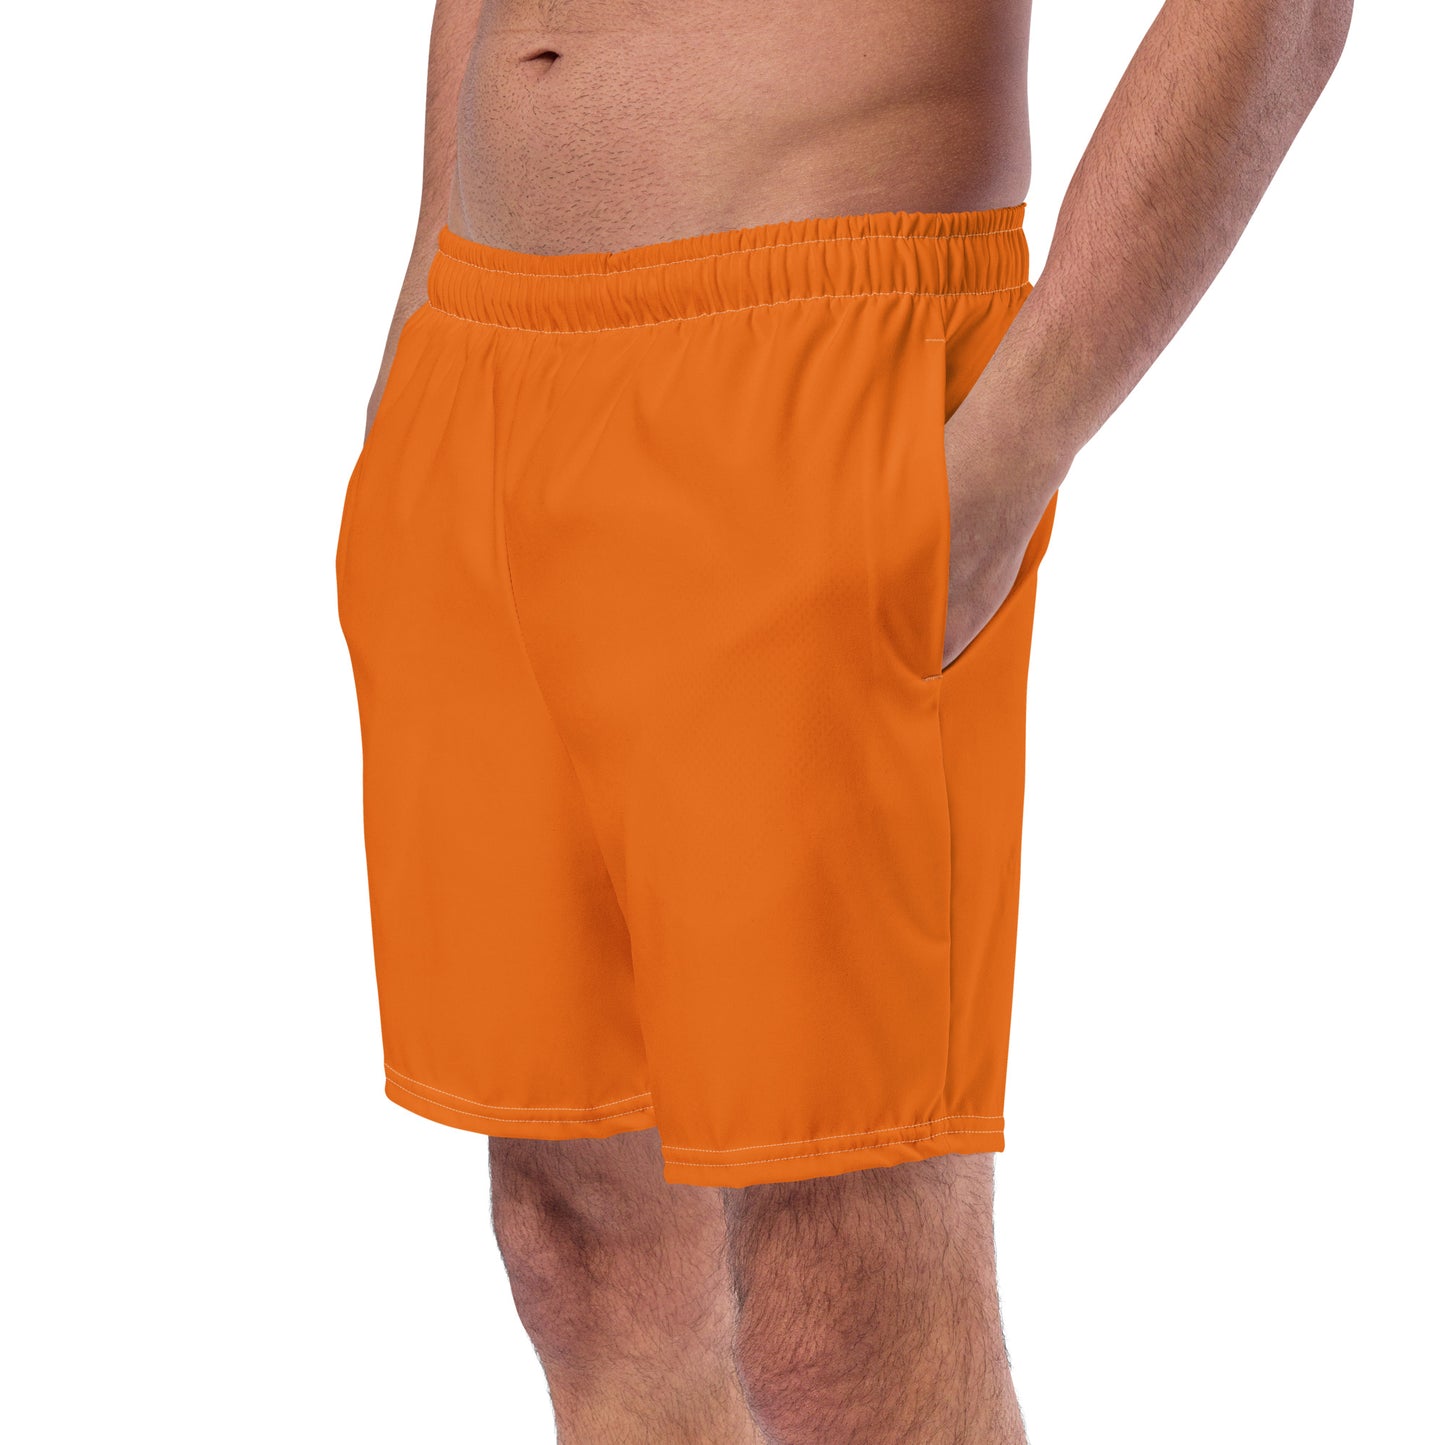 Humble Sportswear, men's Color Match eco-friendly moisture-wicking swim trunks 